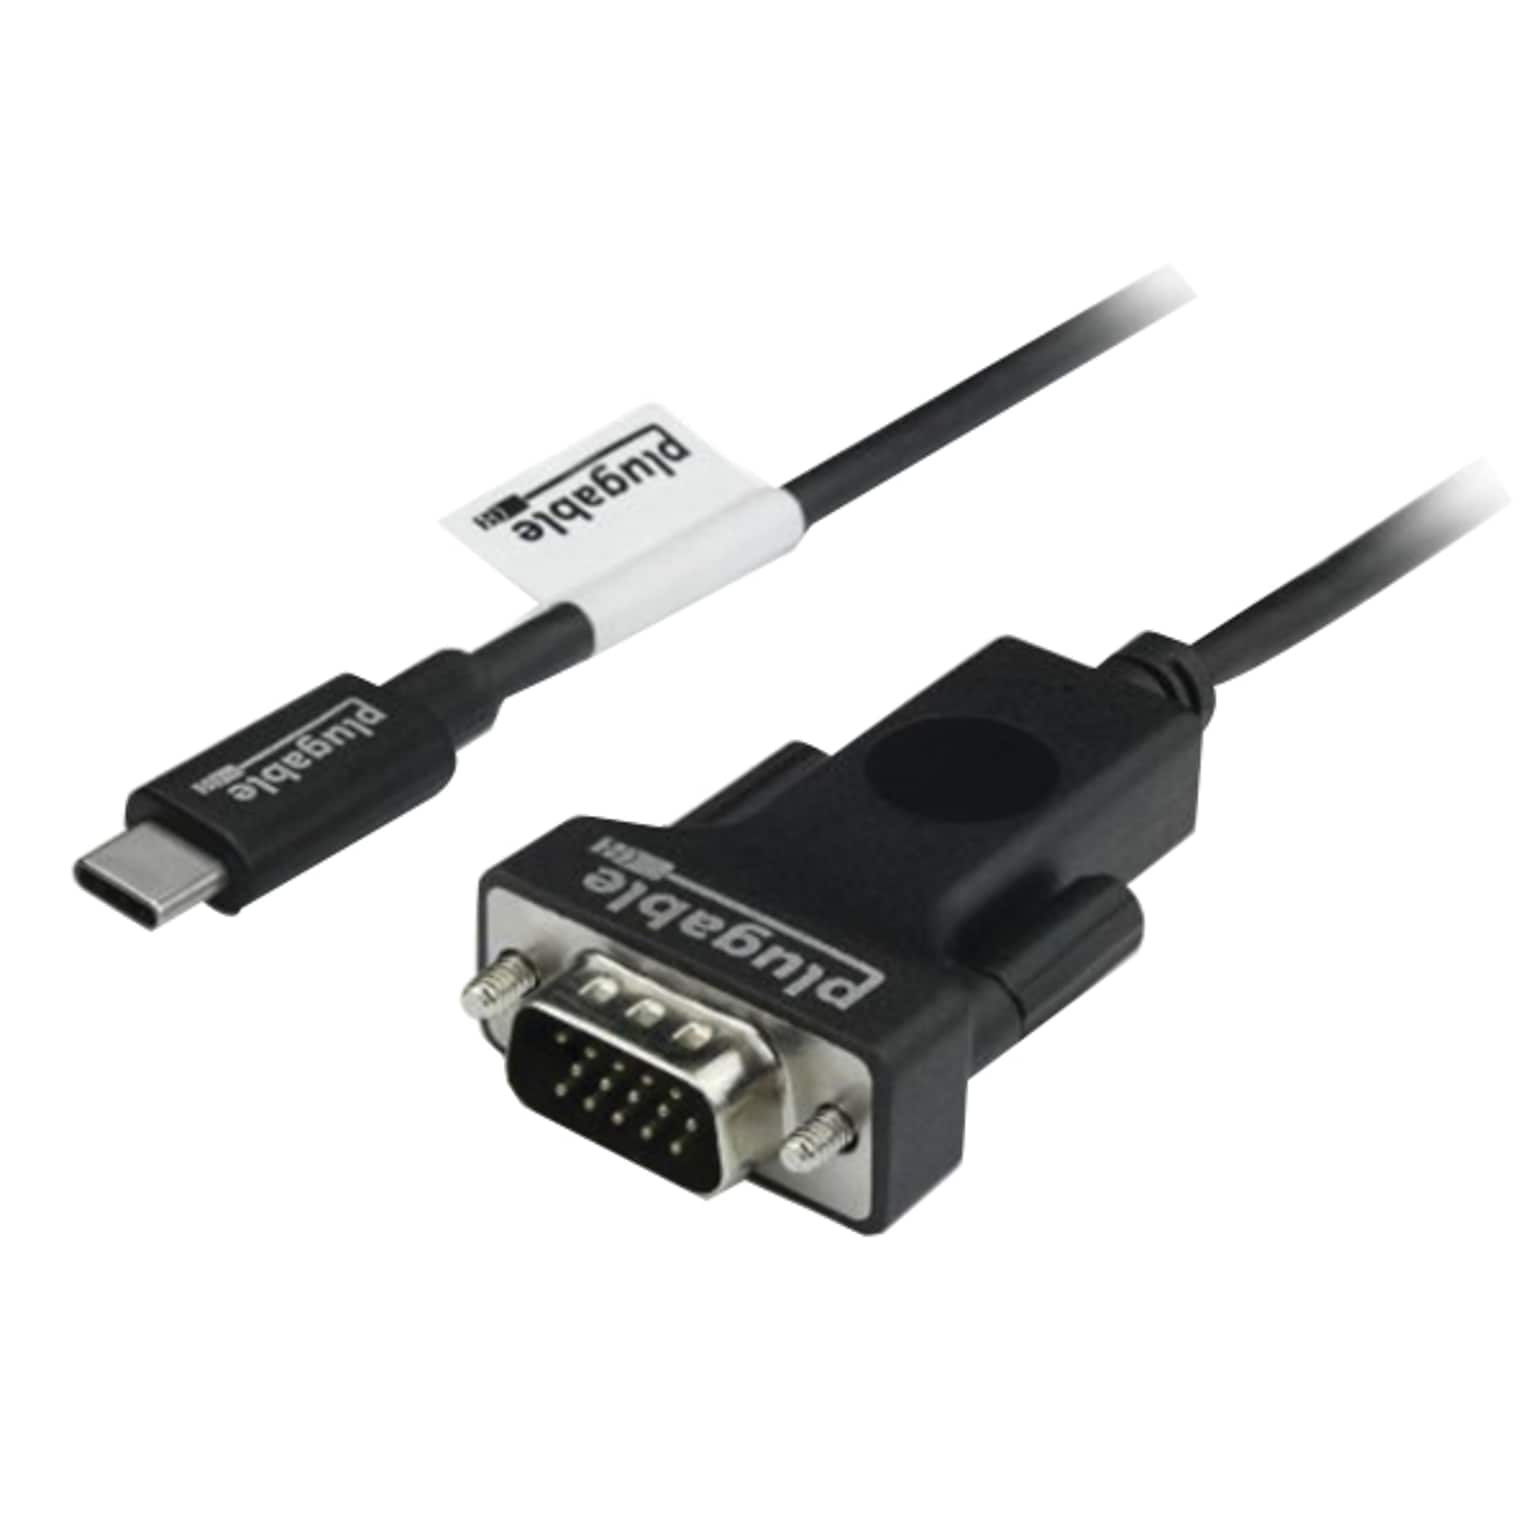 Plugable USBC-VGA-CABLE 6 VGA to USB 3.1 Type C Male/Male Video Cable, Black